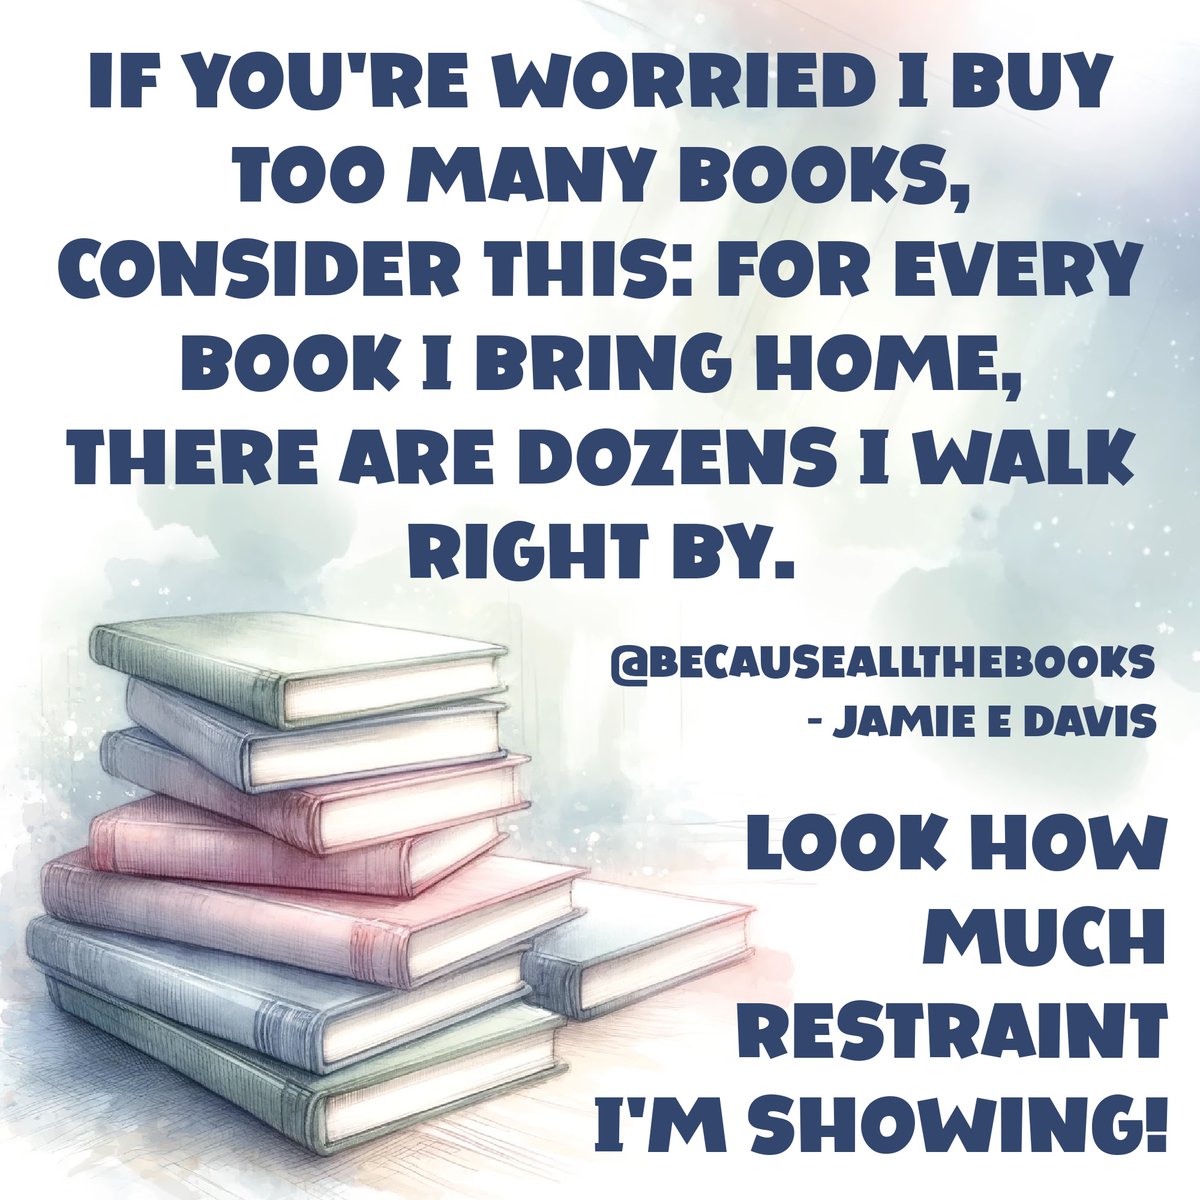 I have SUCH restraint, see?

#BecauseAllTheBooks #BookCollector #MoreBooks #NeedToRead #WantToRead